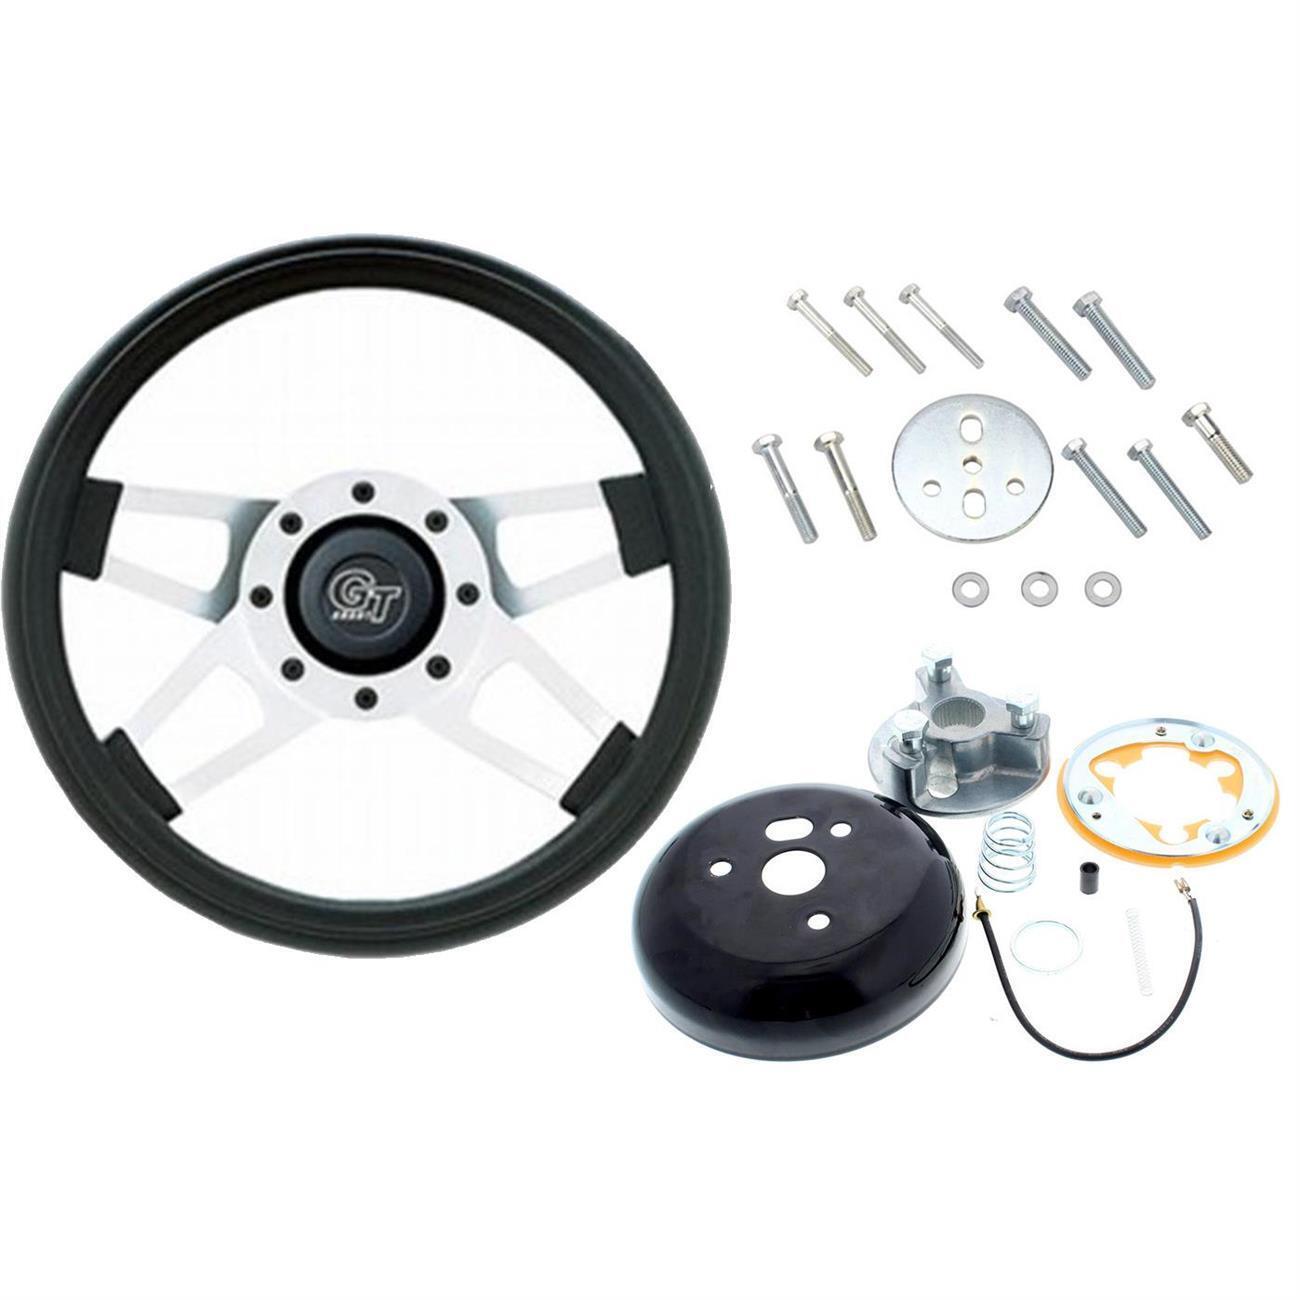 Grant 415 Challenger GT Steering Wheel, 13-1/2 Inch w/Install Kit